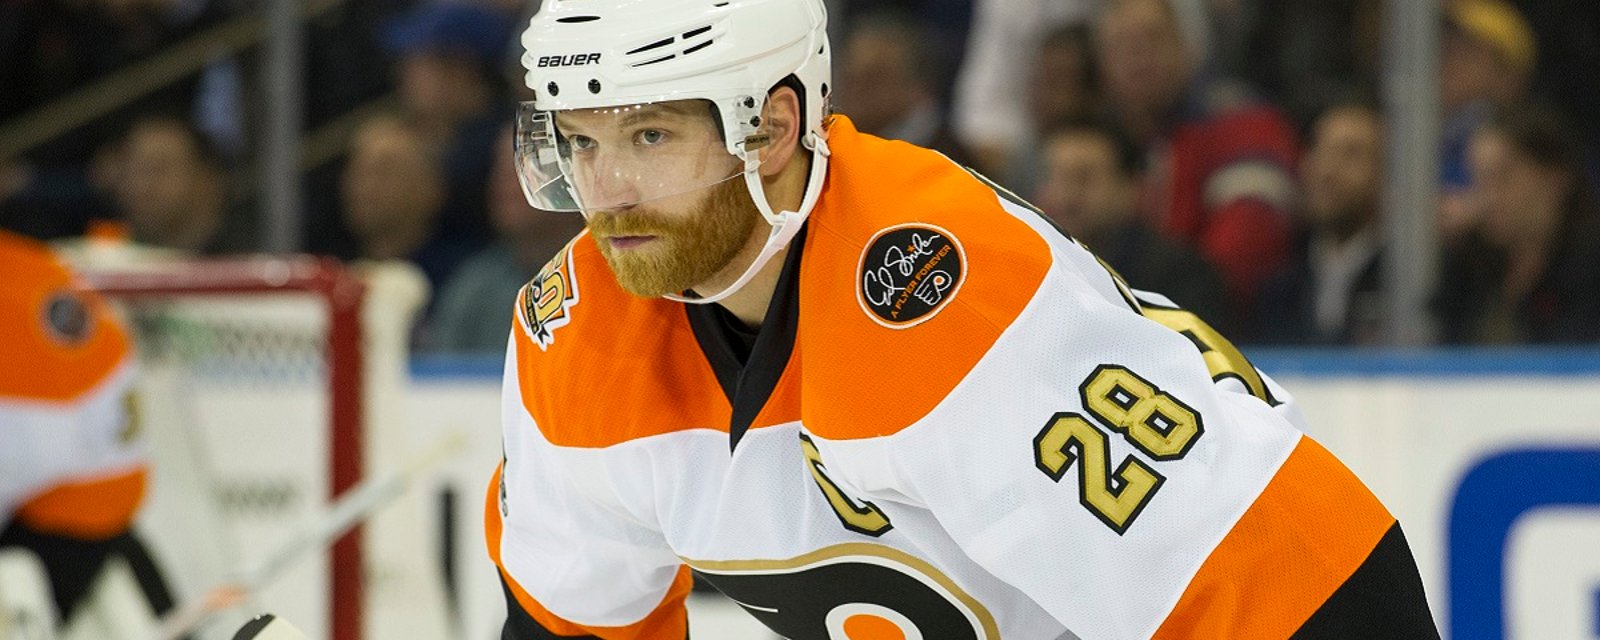 Breaking: Major changes coming for Flyers' captain Claude Giroux. 